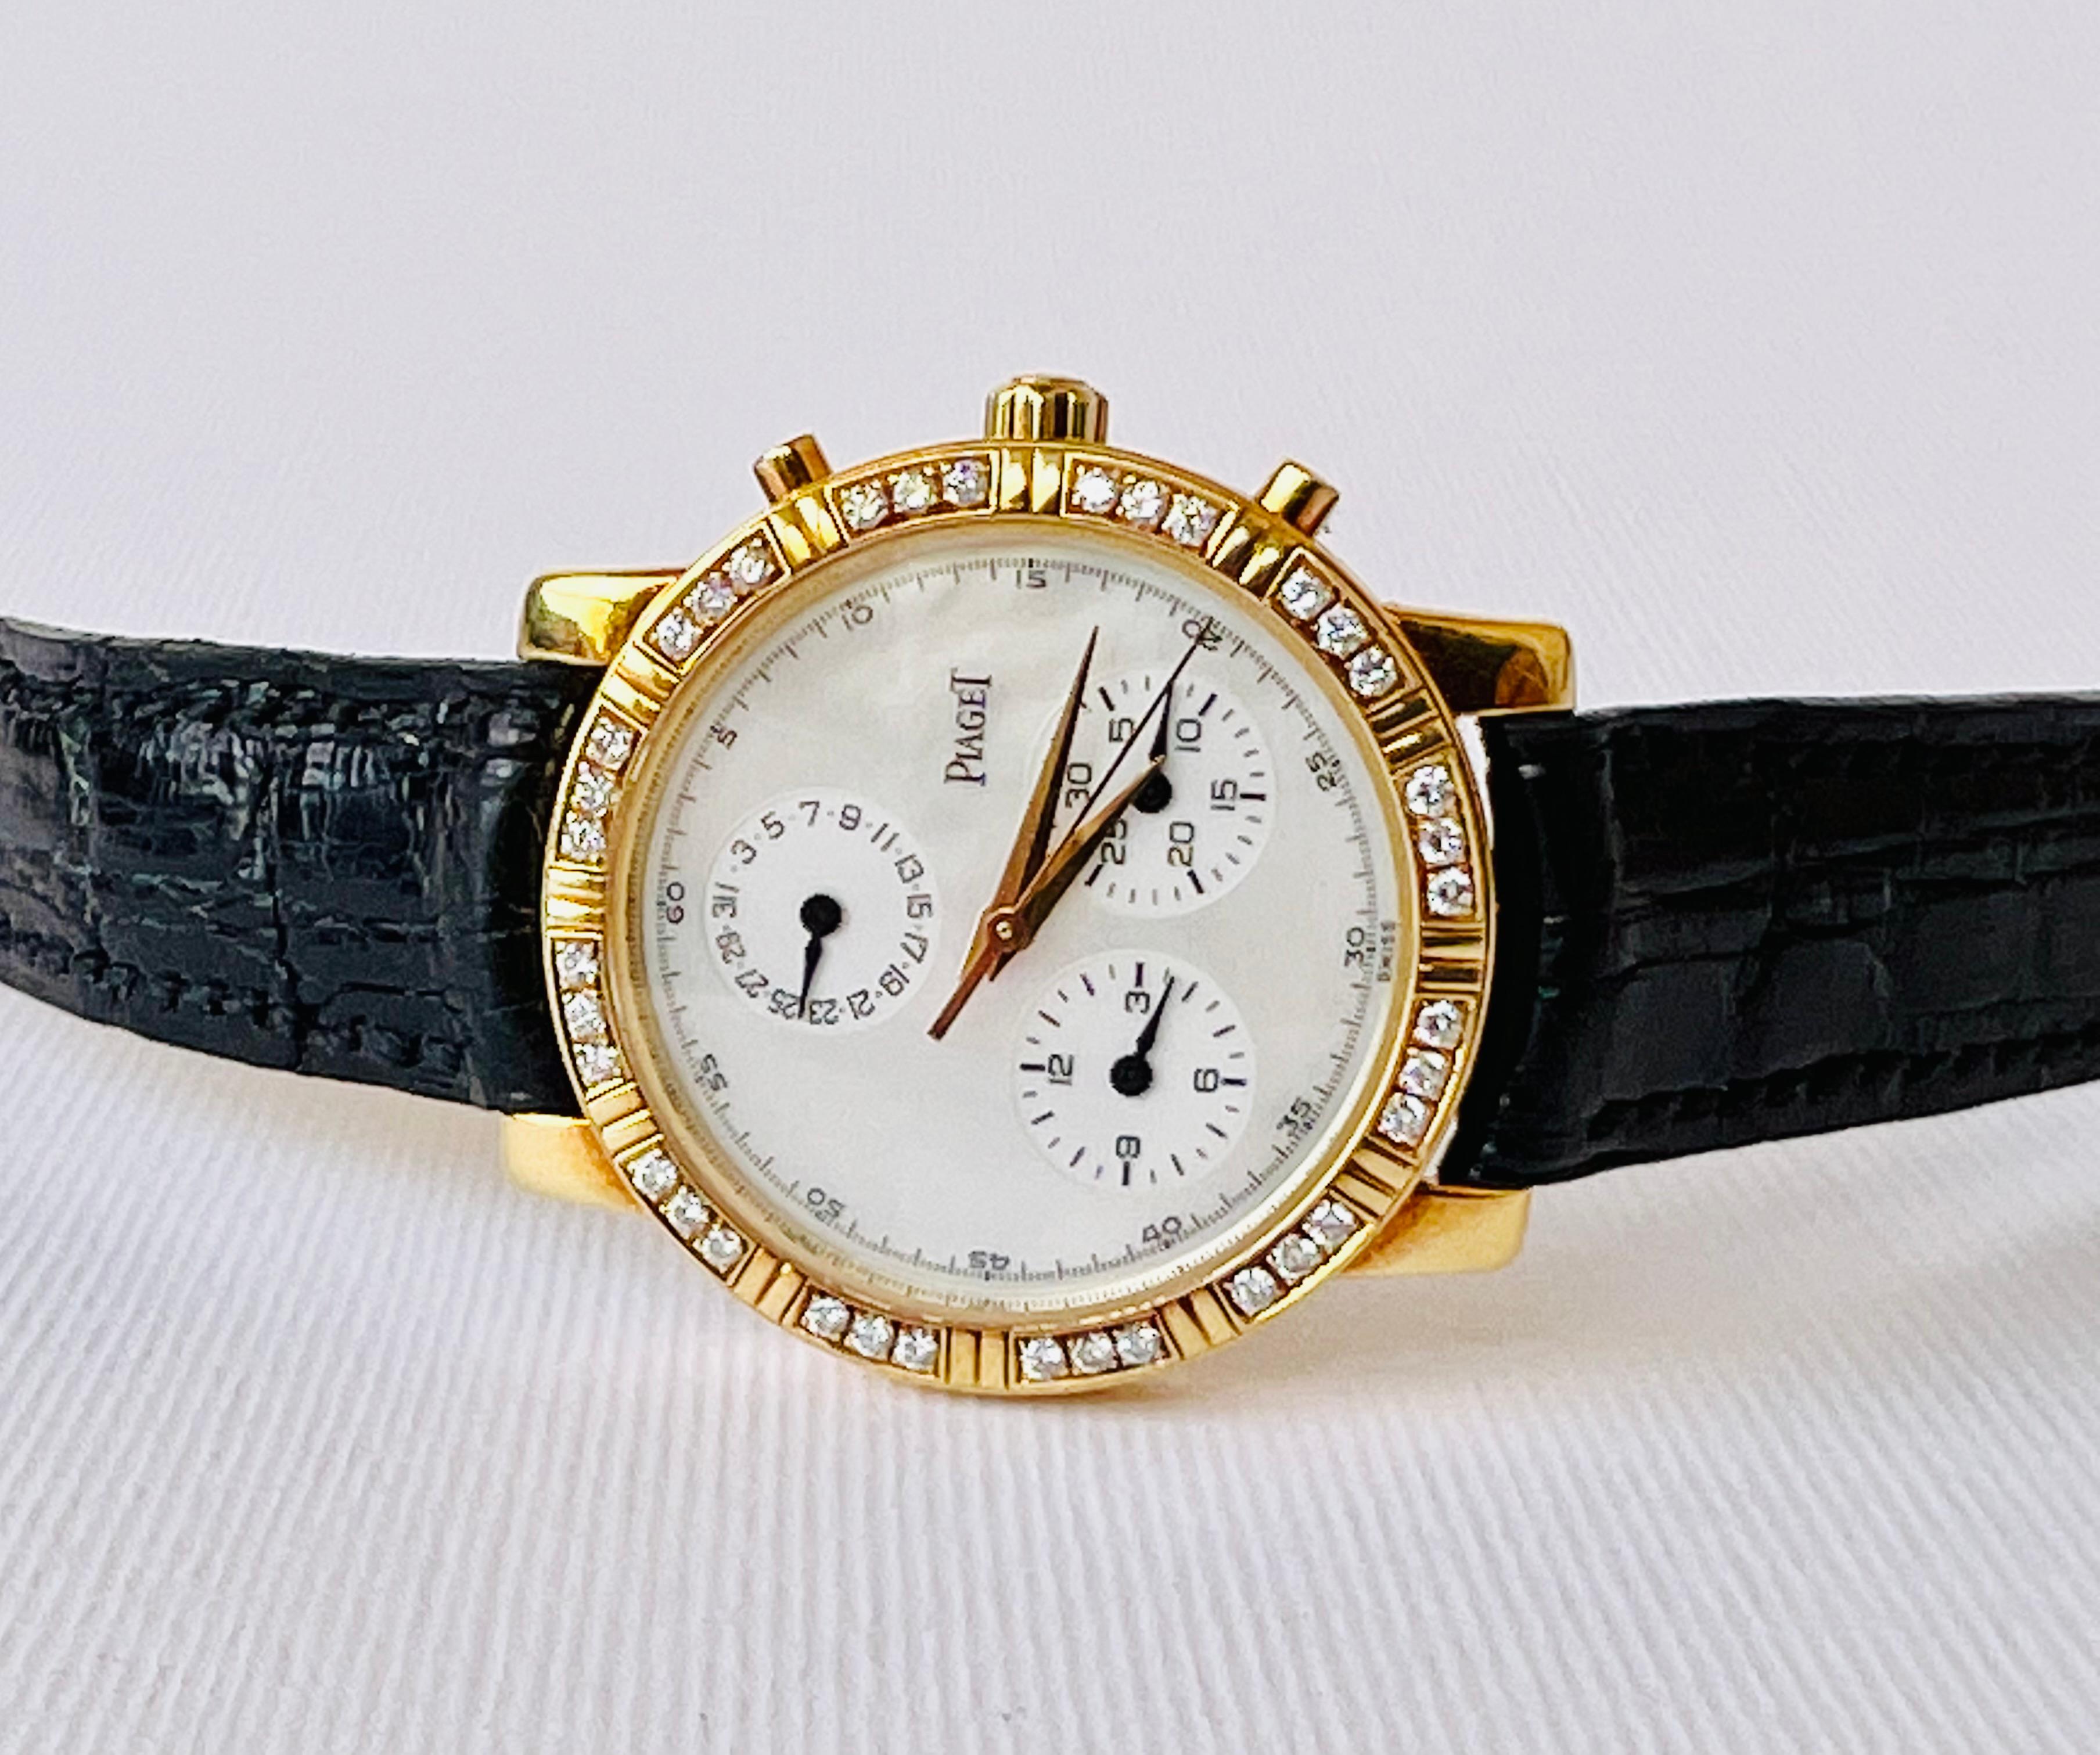 Piaget Haute Complication Chronograph 14013 MOP Dial 18k Gold Diamond Watch For Sale 10